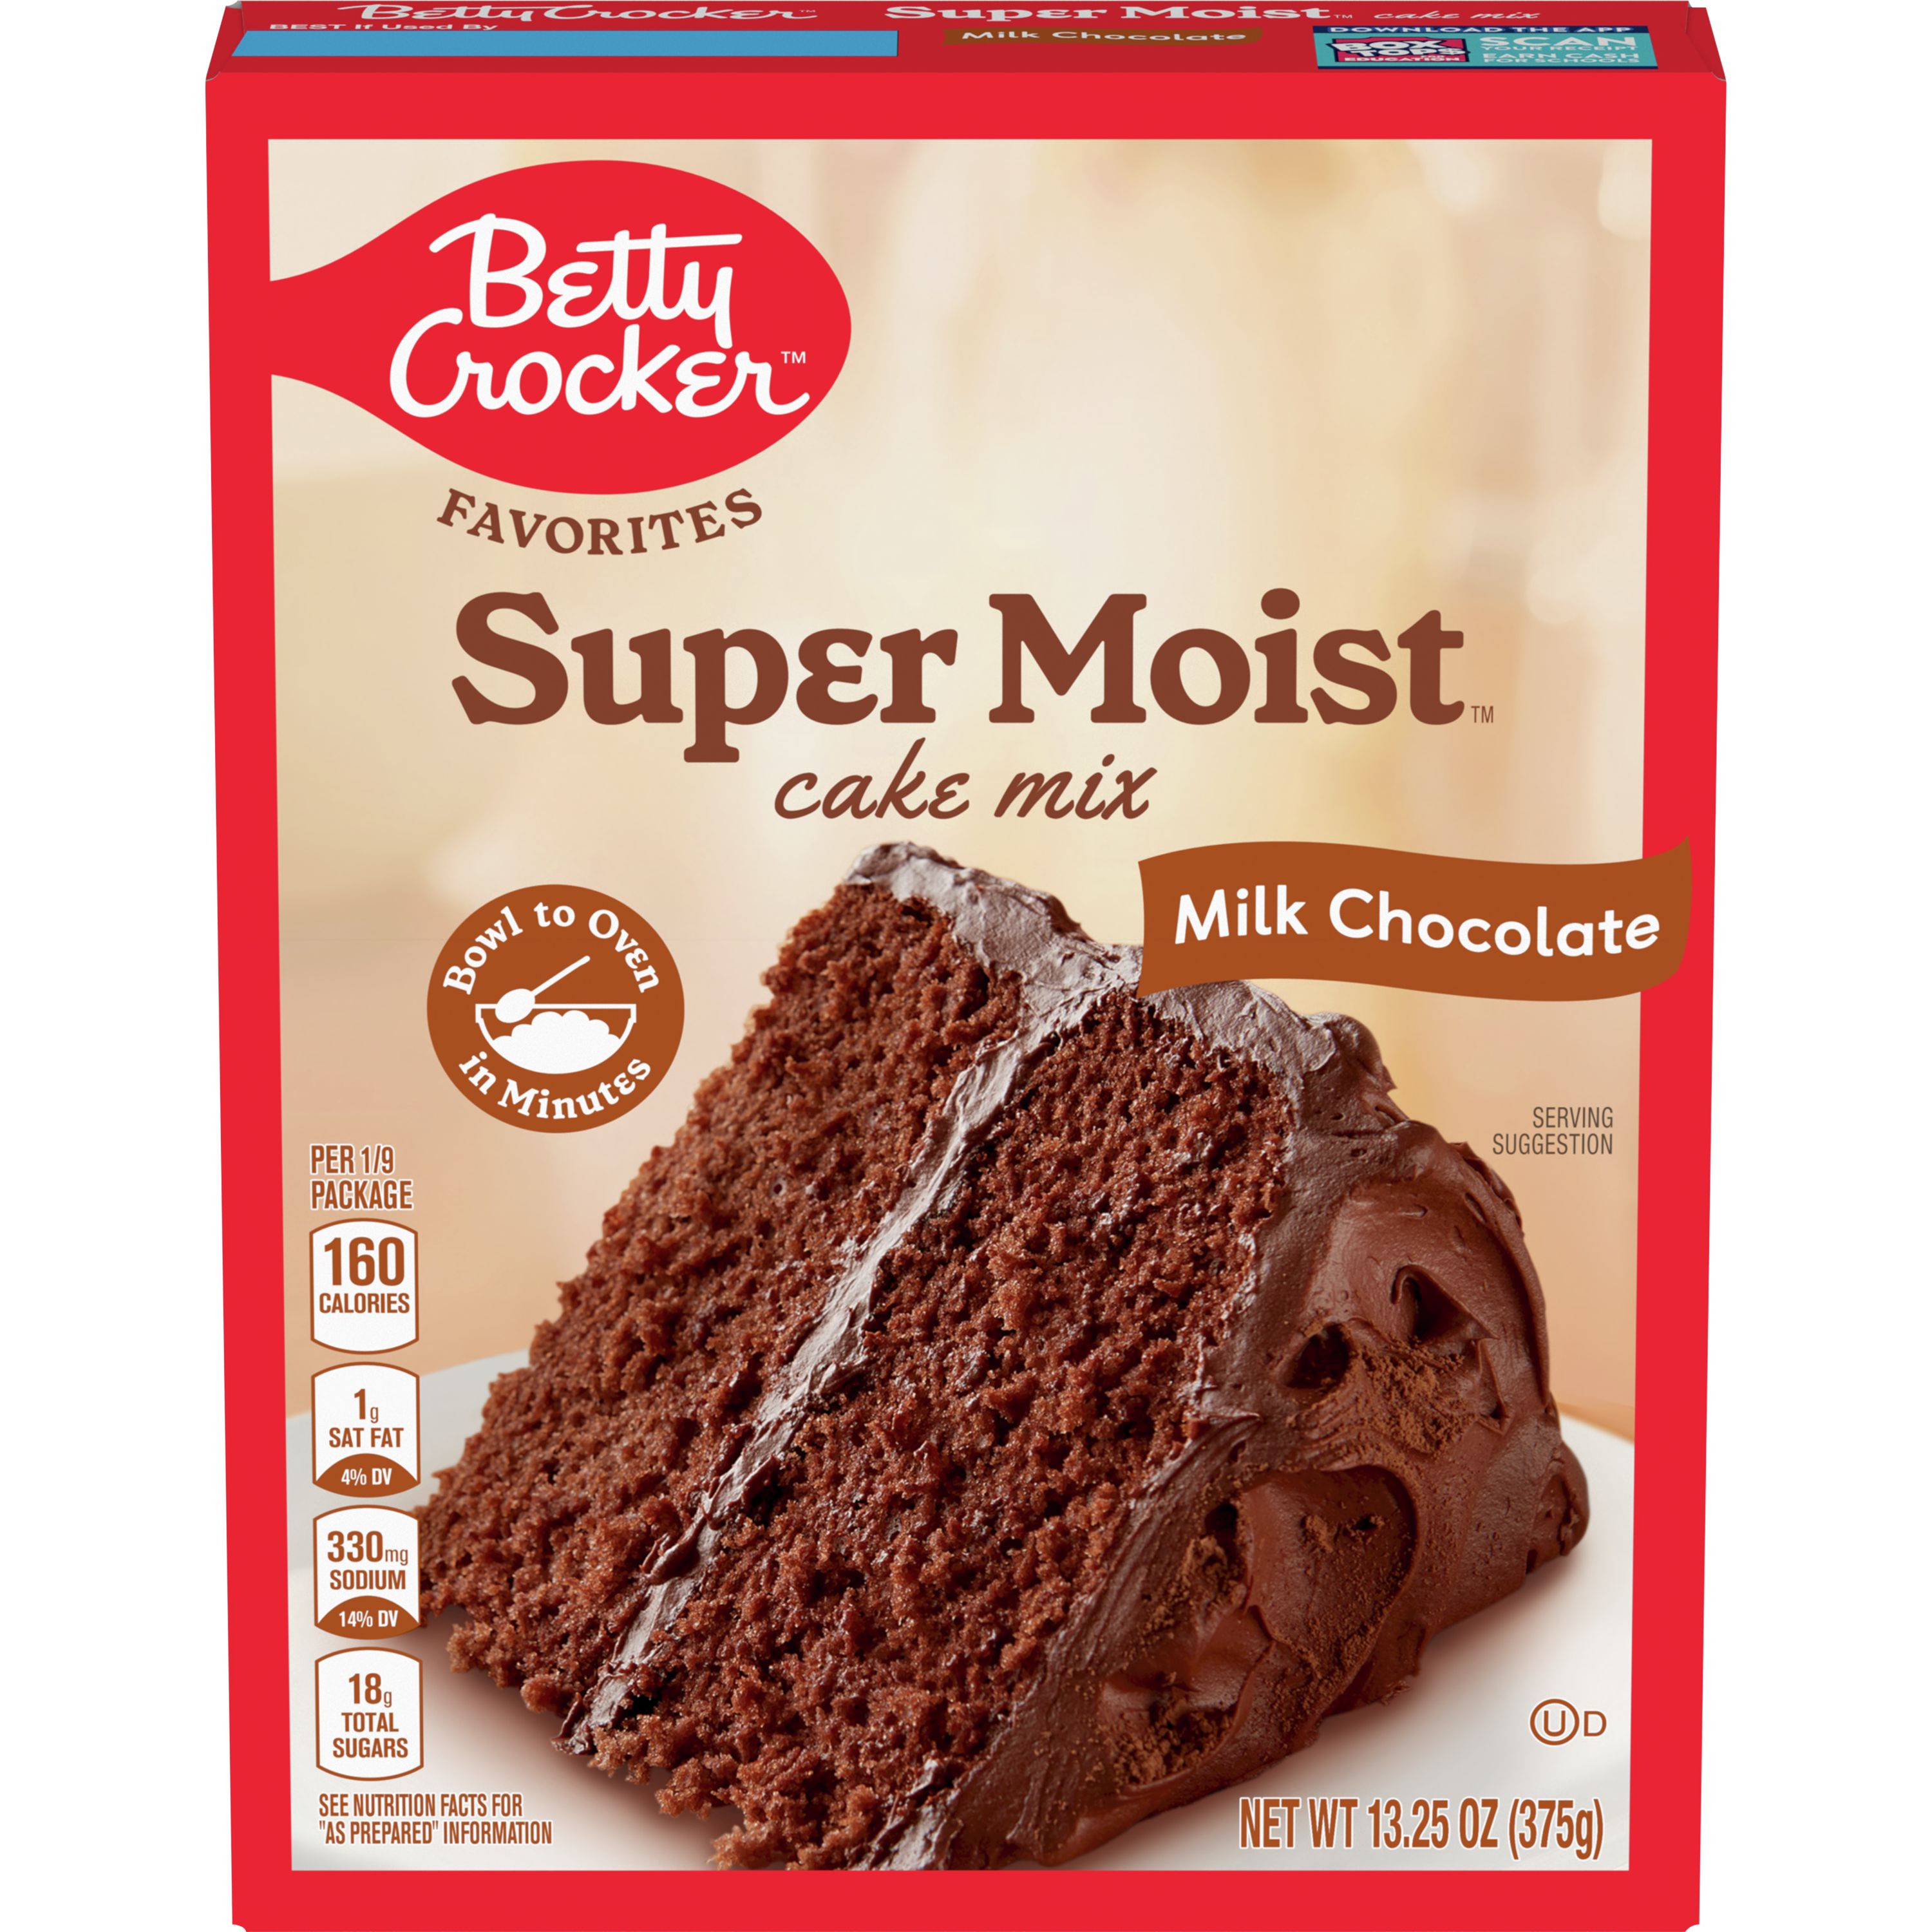 Uskyld Skærpe oprejst Betty Crocker Favorites Super Moist Milk Chocolate Cake Mix, 13.25 oz. -  BettyCrocker.com